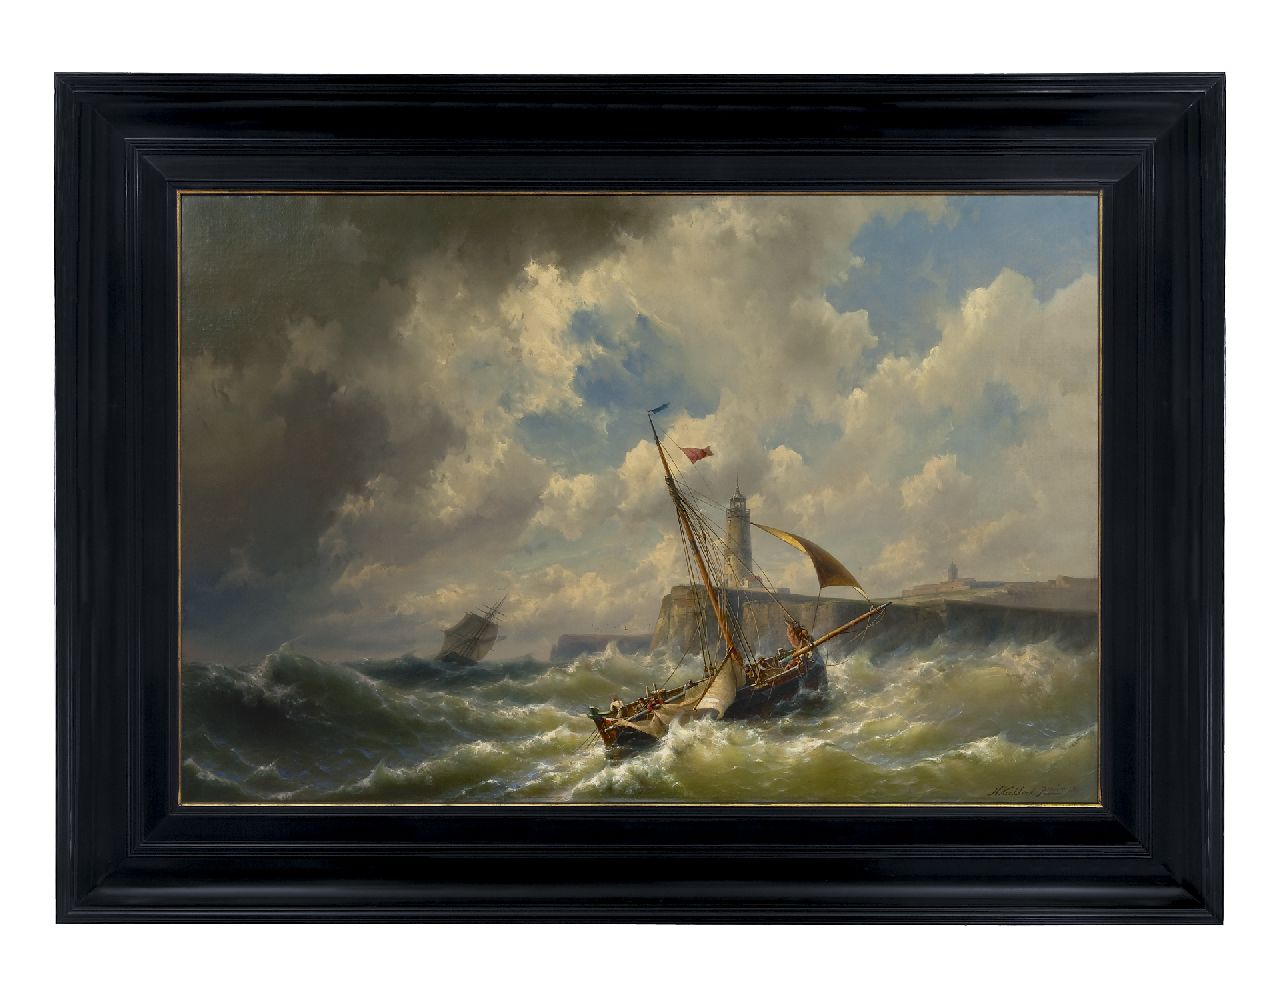 Koekkoek jr. H.  | Hermanus Koekkoek jr., Entering the harbour in a storm, oil on canvas 84.6 x 128.8 cm, signed l.r. and dated 1860